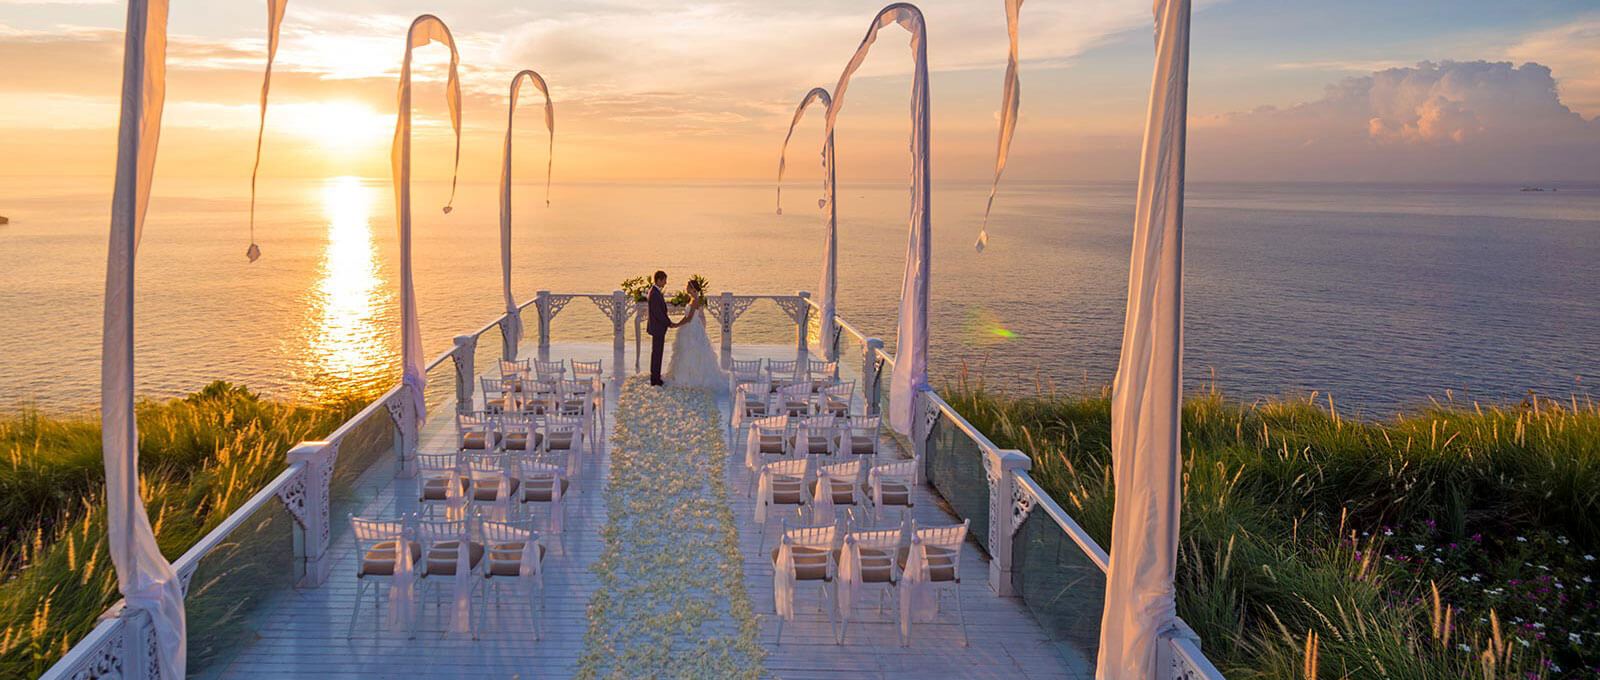 Wedding by Ayana Resort and Spa, Bali